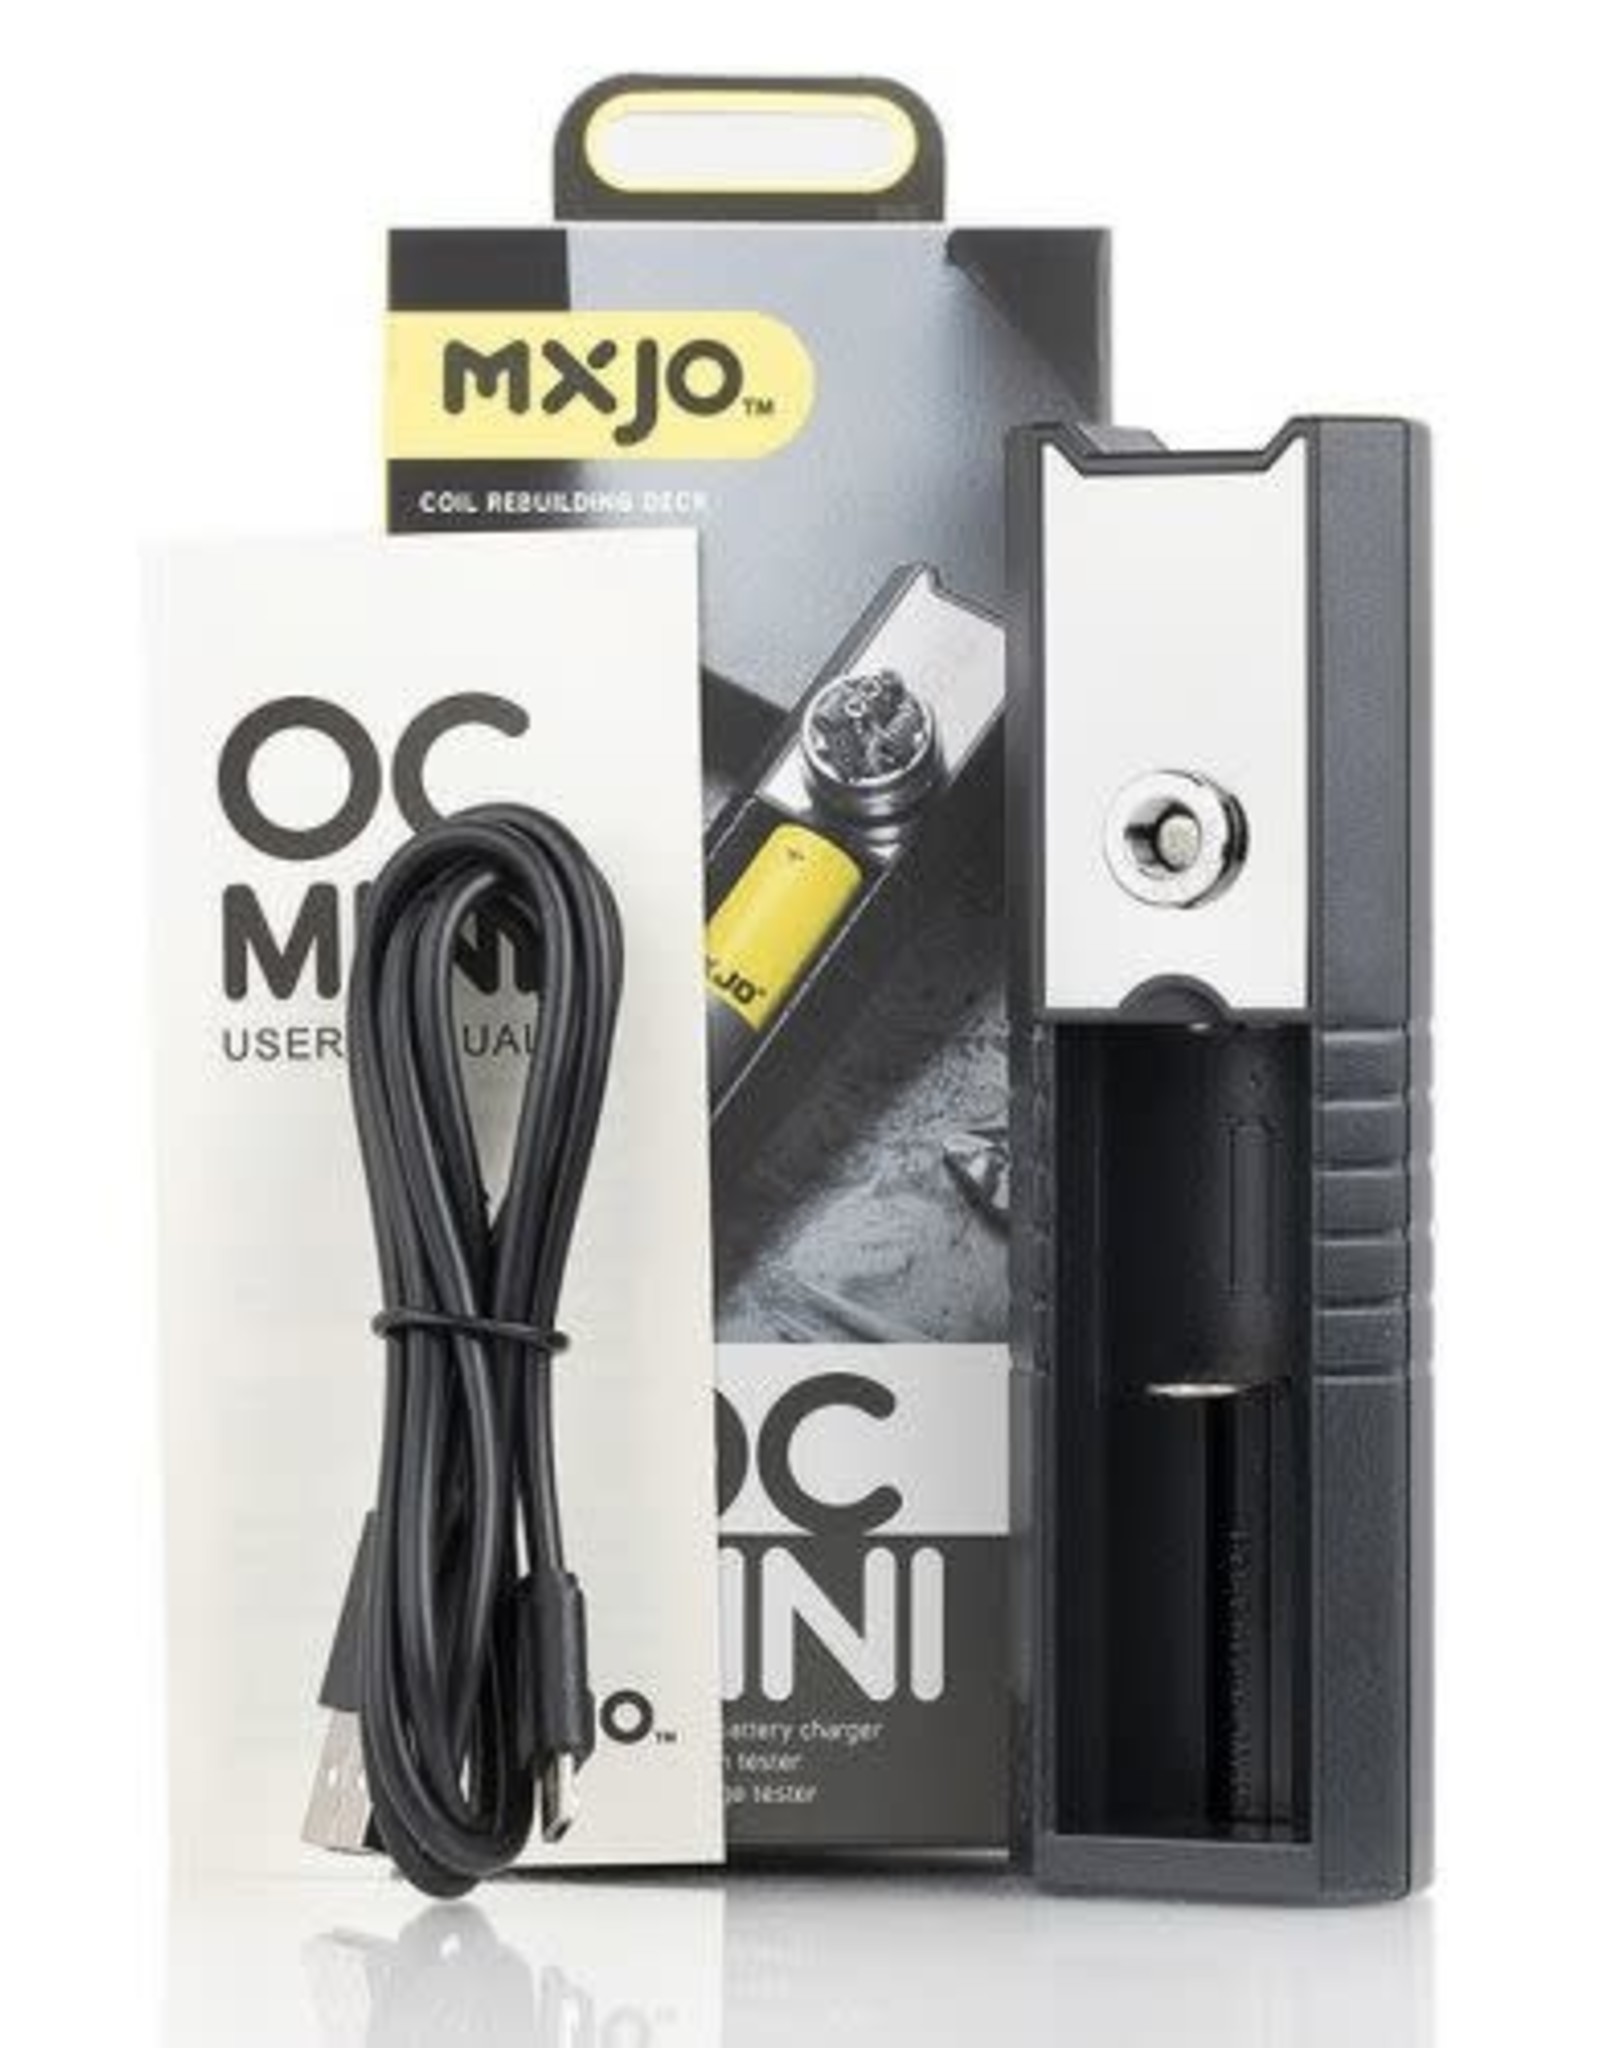 MXJO MXJO OC Mini Charger/Tester